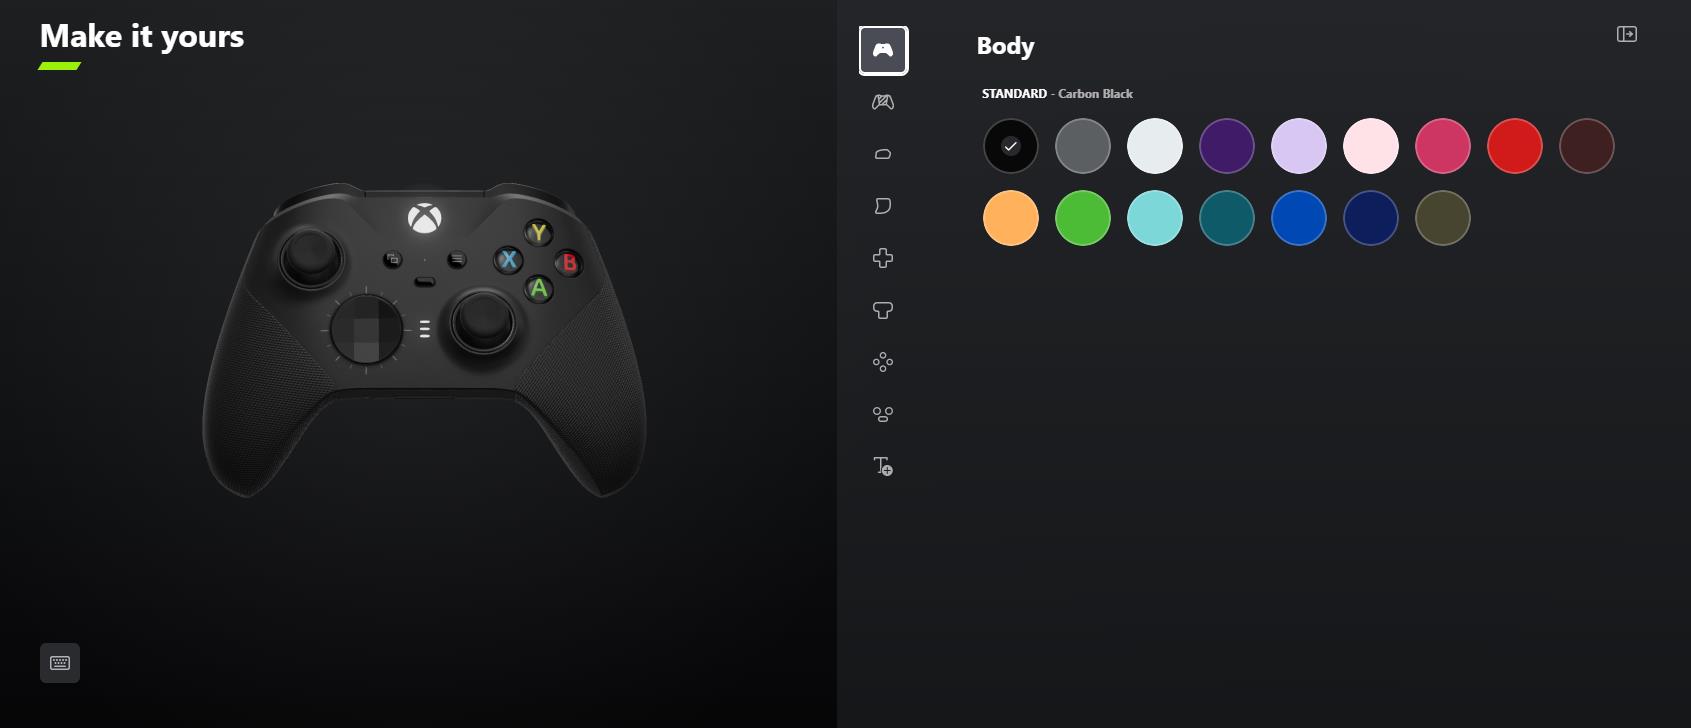 Xbox手柄定制服务推出精英手柄二代定制 更多颜色可选 二次世界 第3张